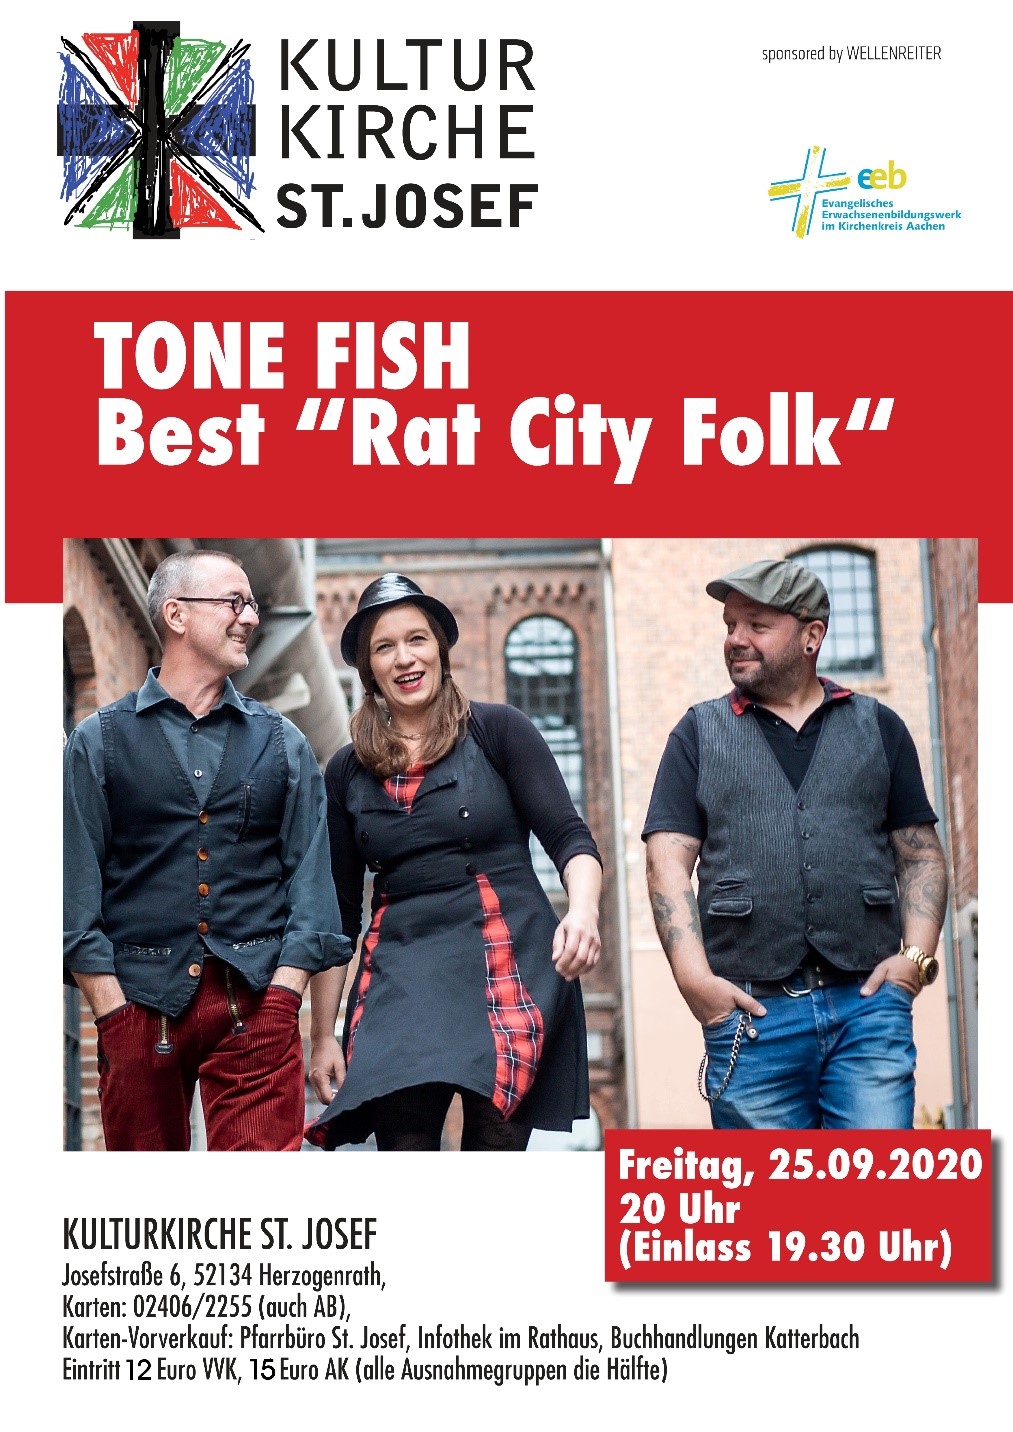 TONE FISH Best Rat City Folk (c) Veranstalter